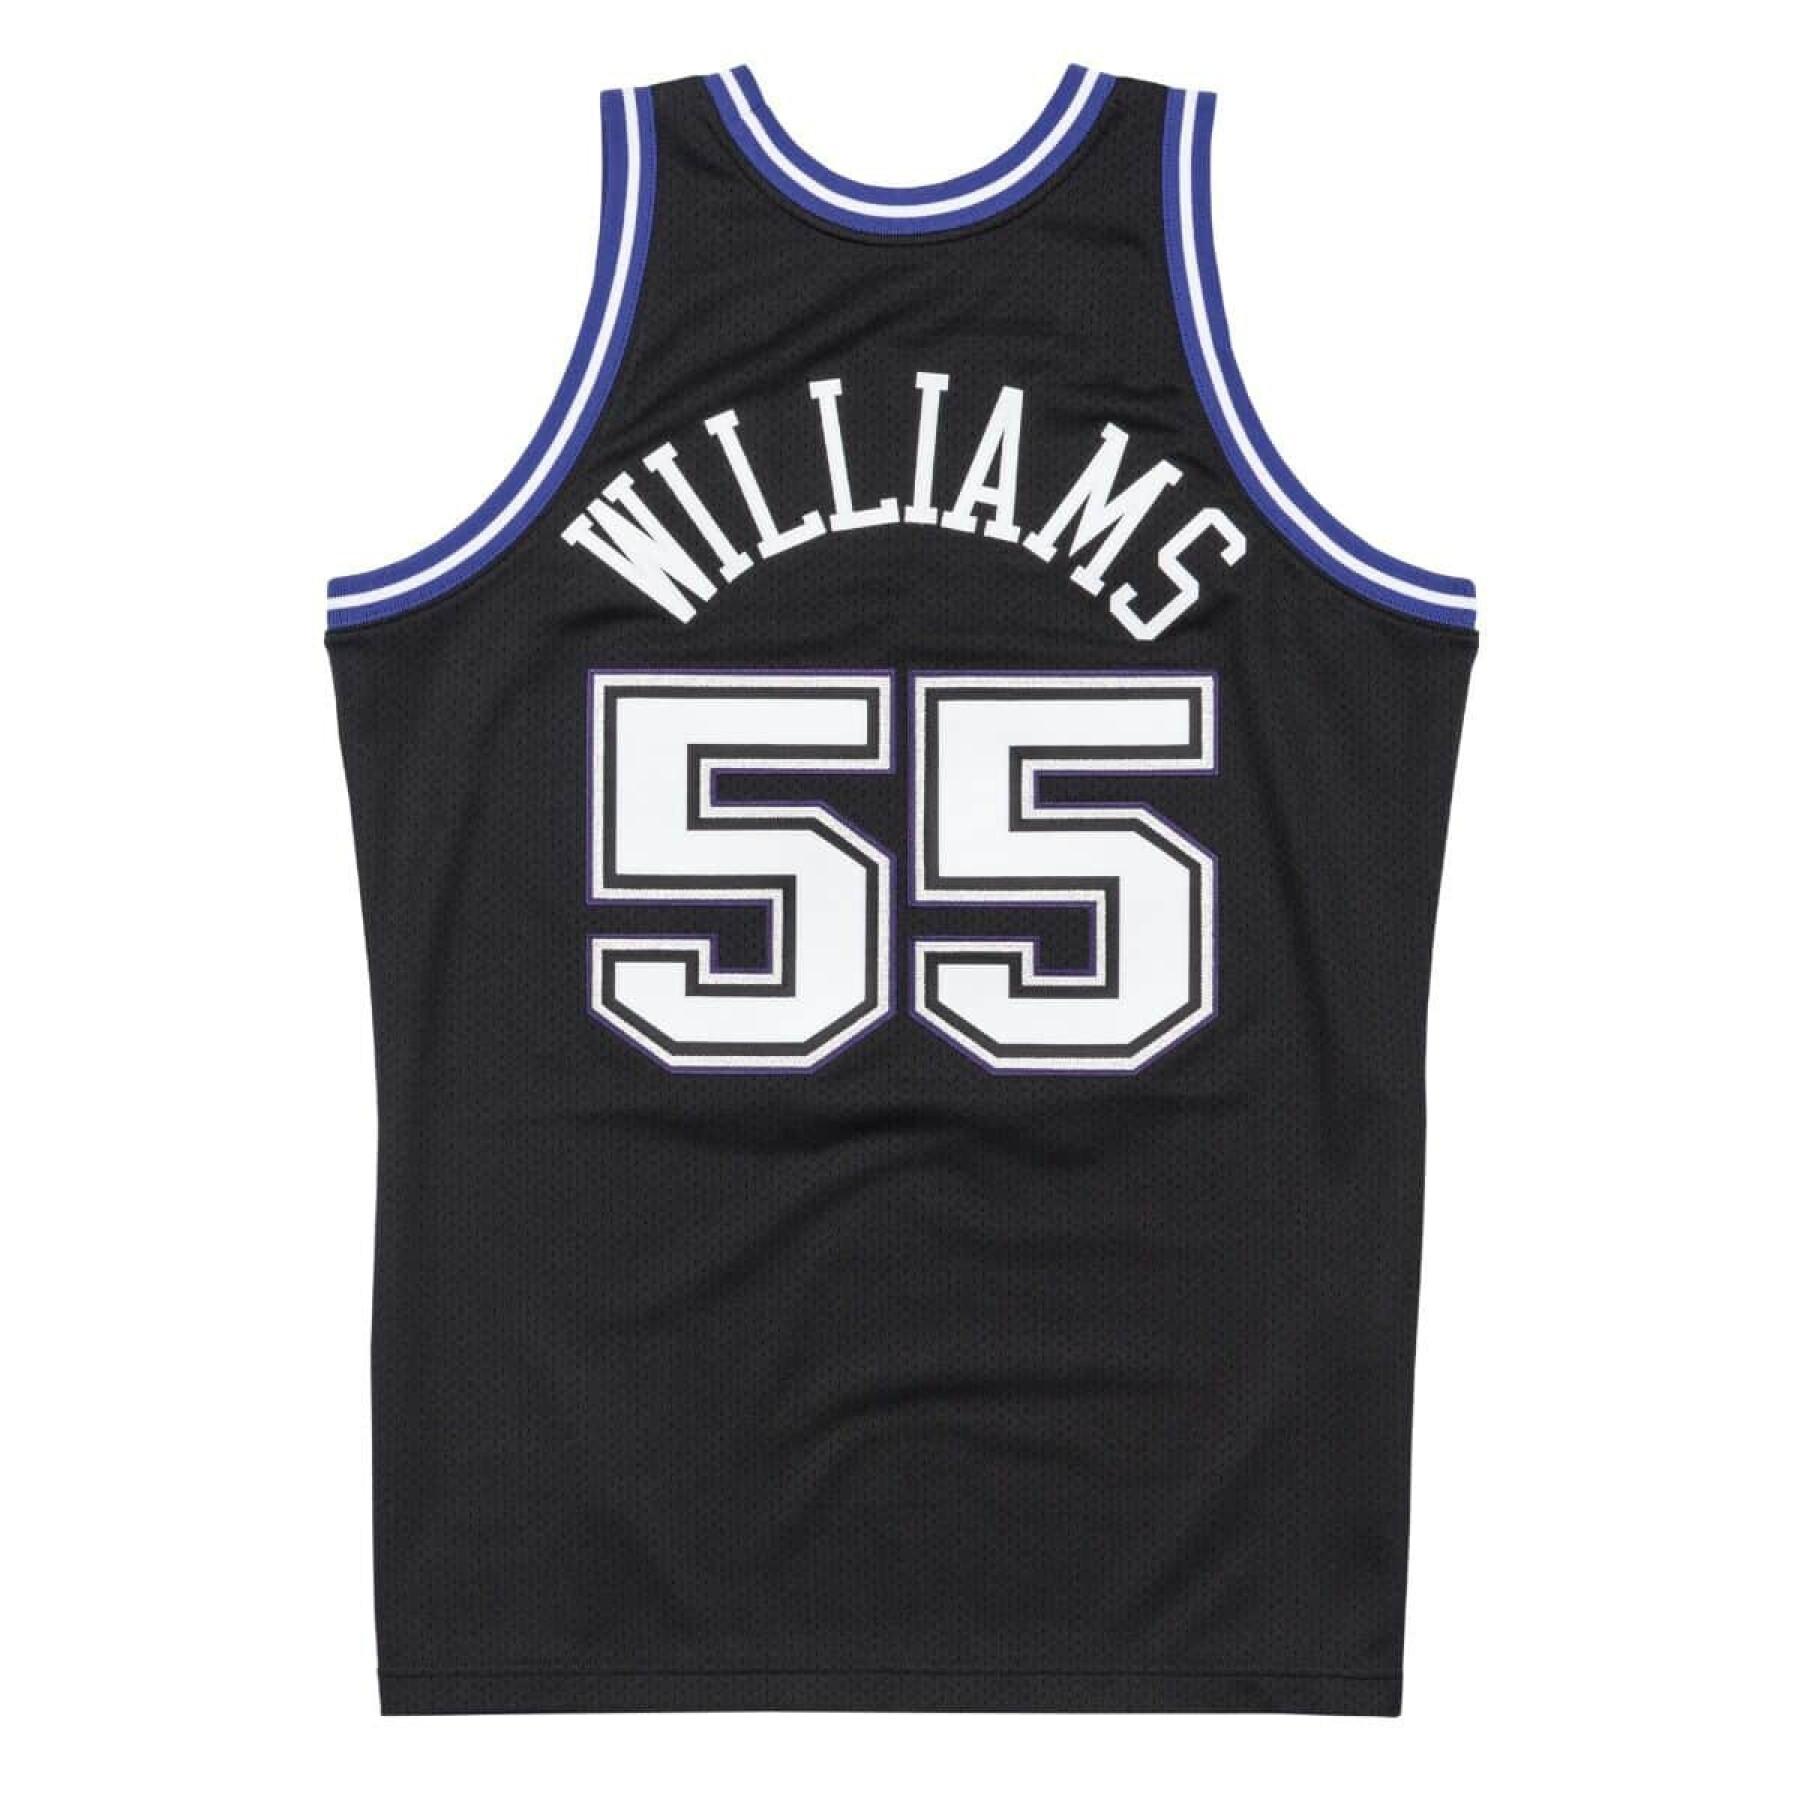 Authentic Jersey Sacramento Kings Jason Williams 1998/99